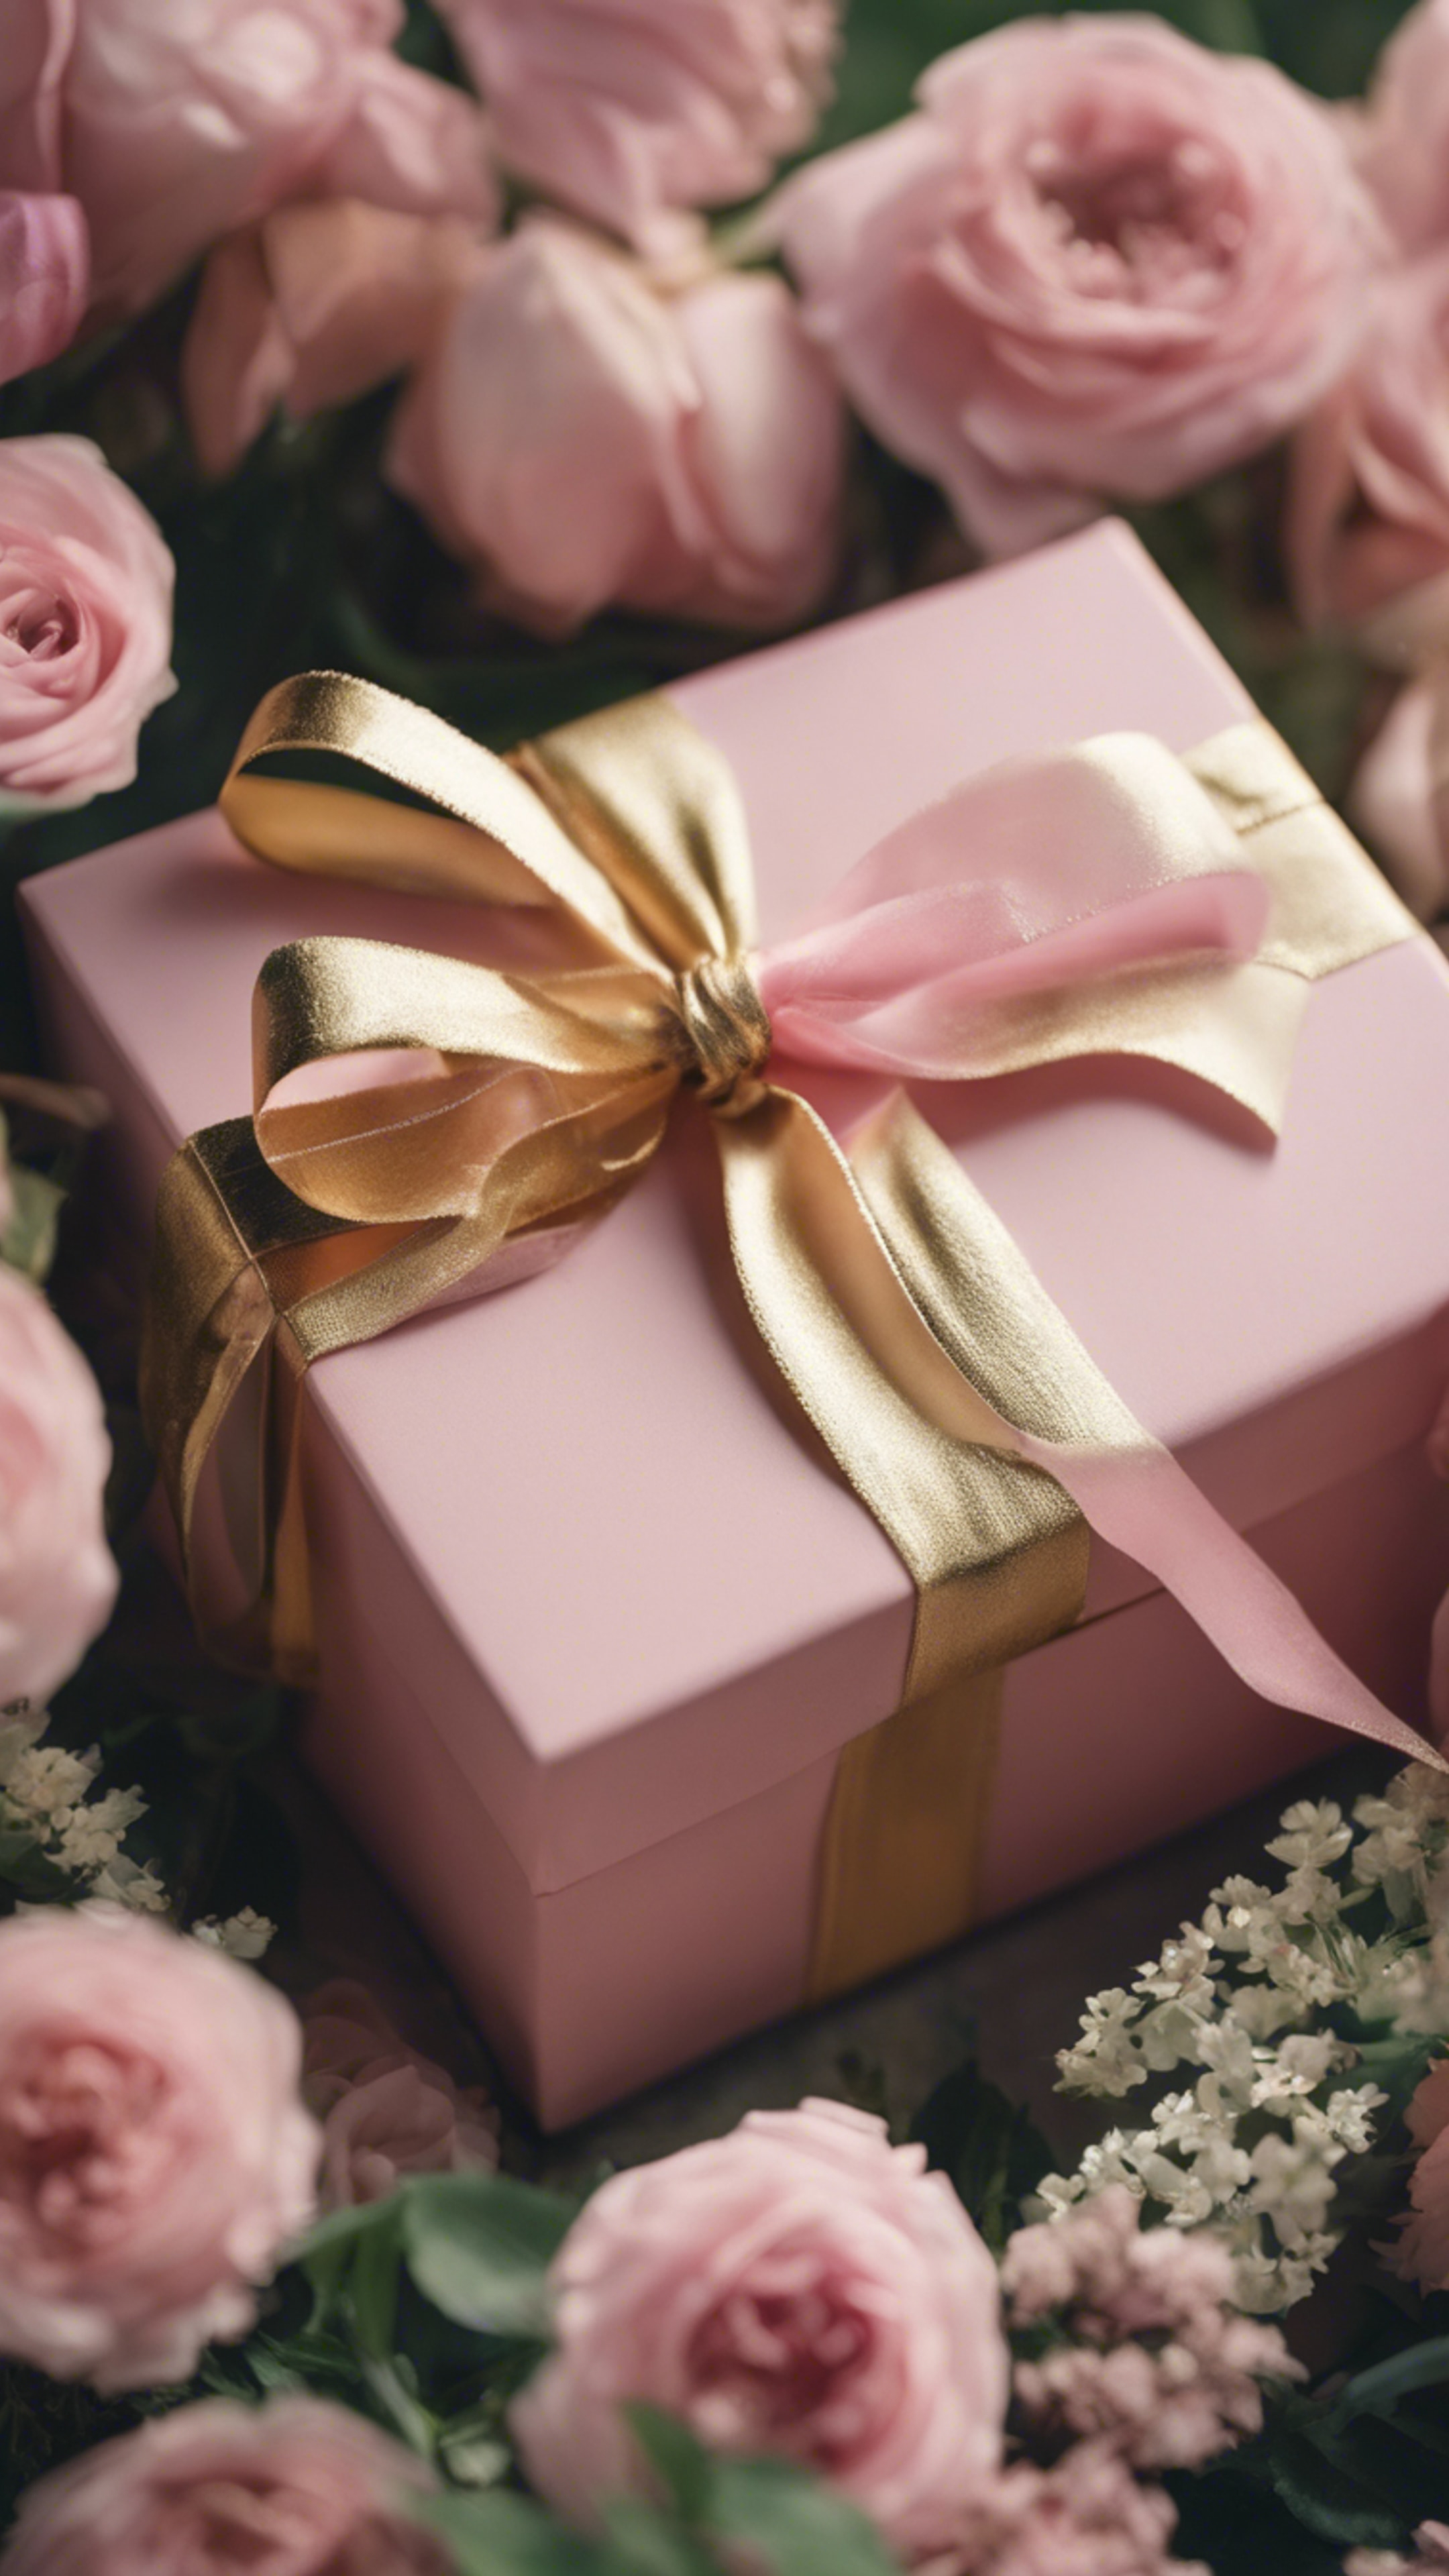 A gold-ribboned pink gift box nestled amongst flowers and greenery. Tapeta[057f26c1d4b14d2a96a8]